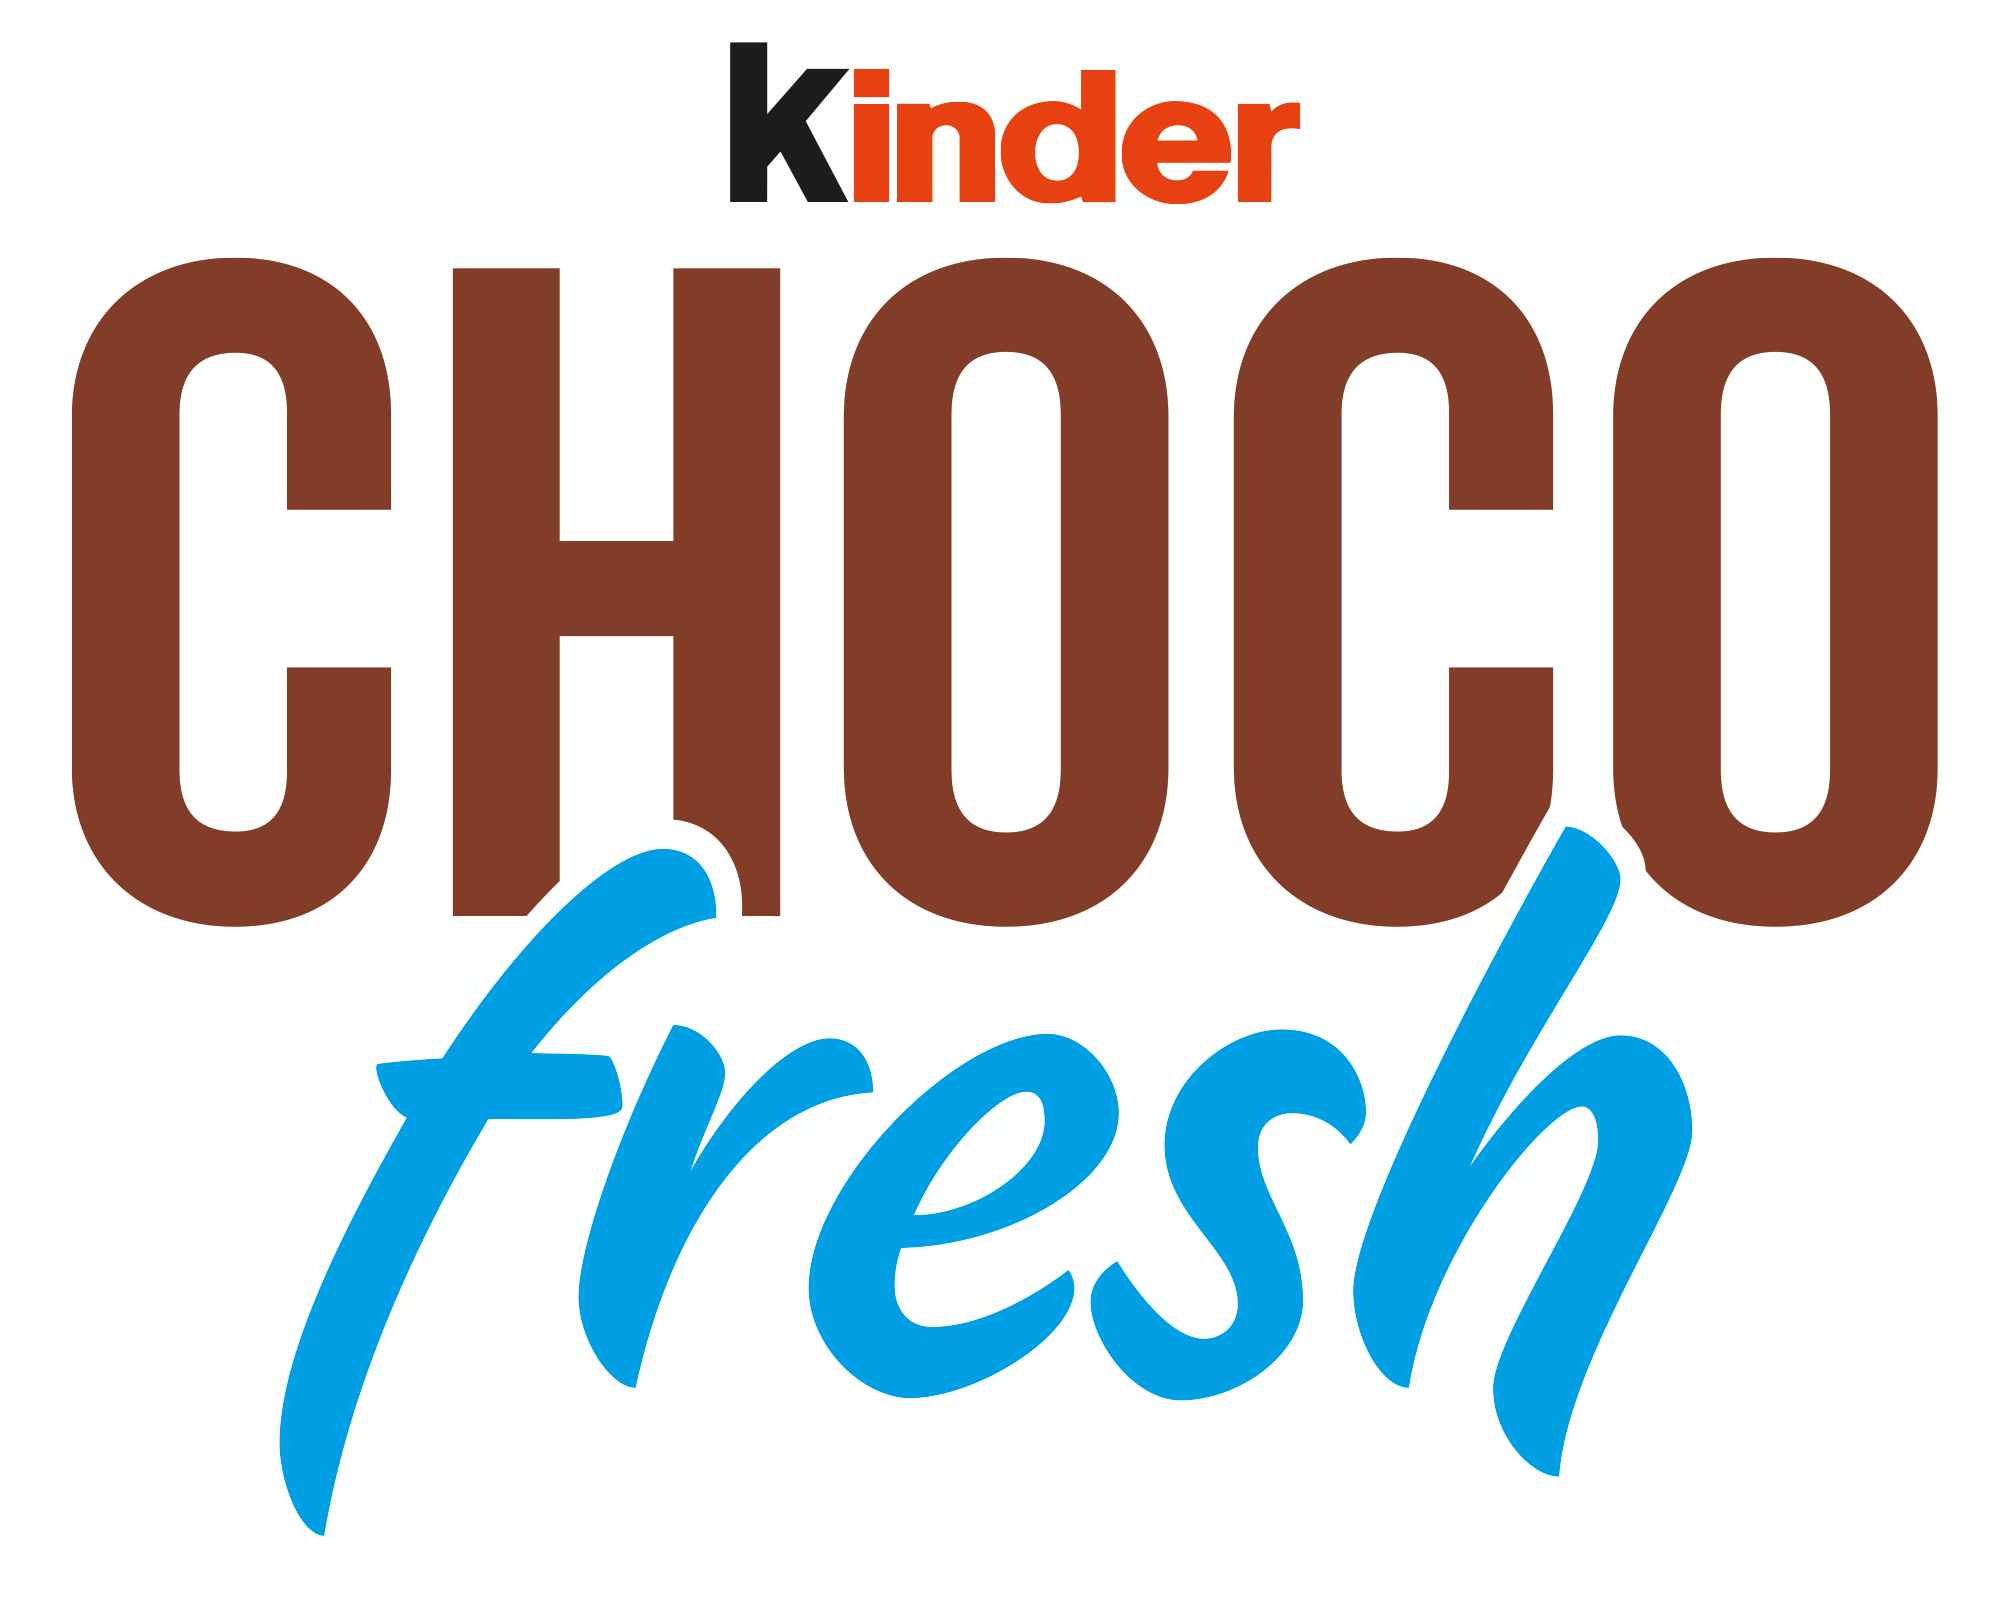 Kinder choco fresh logo